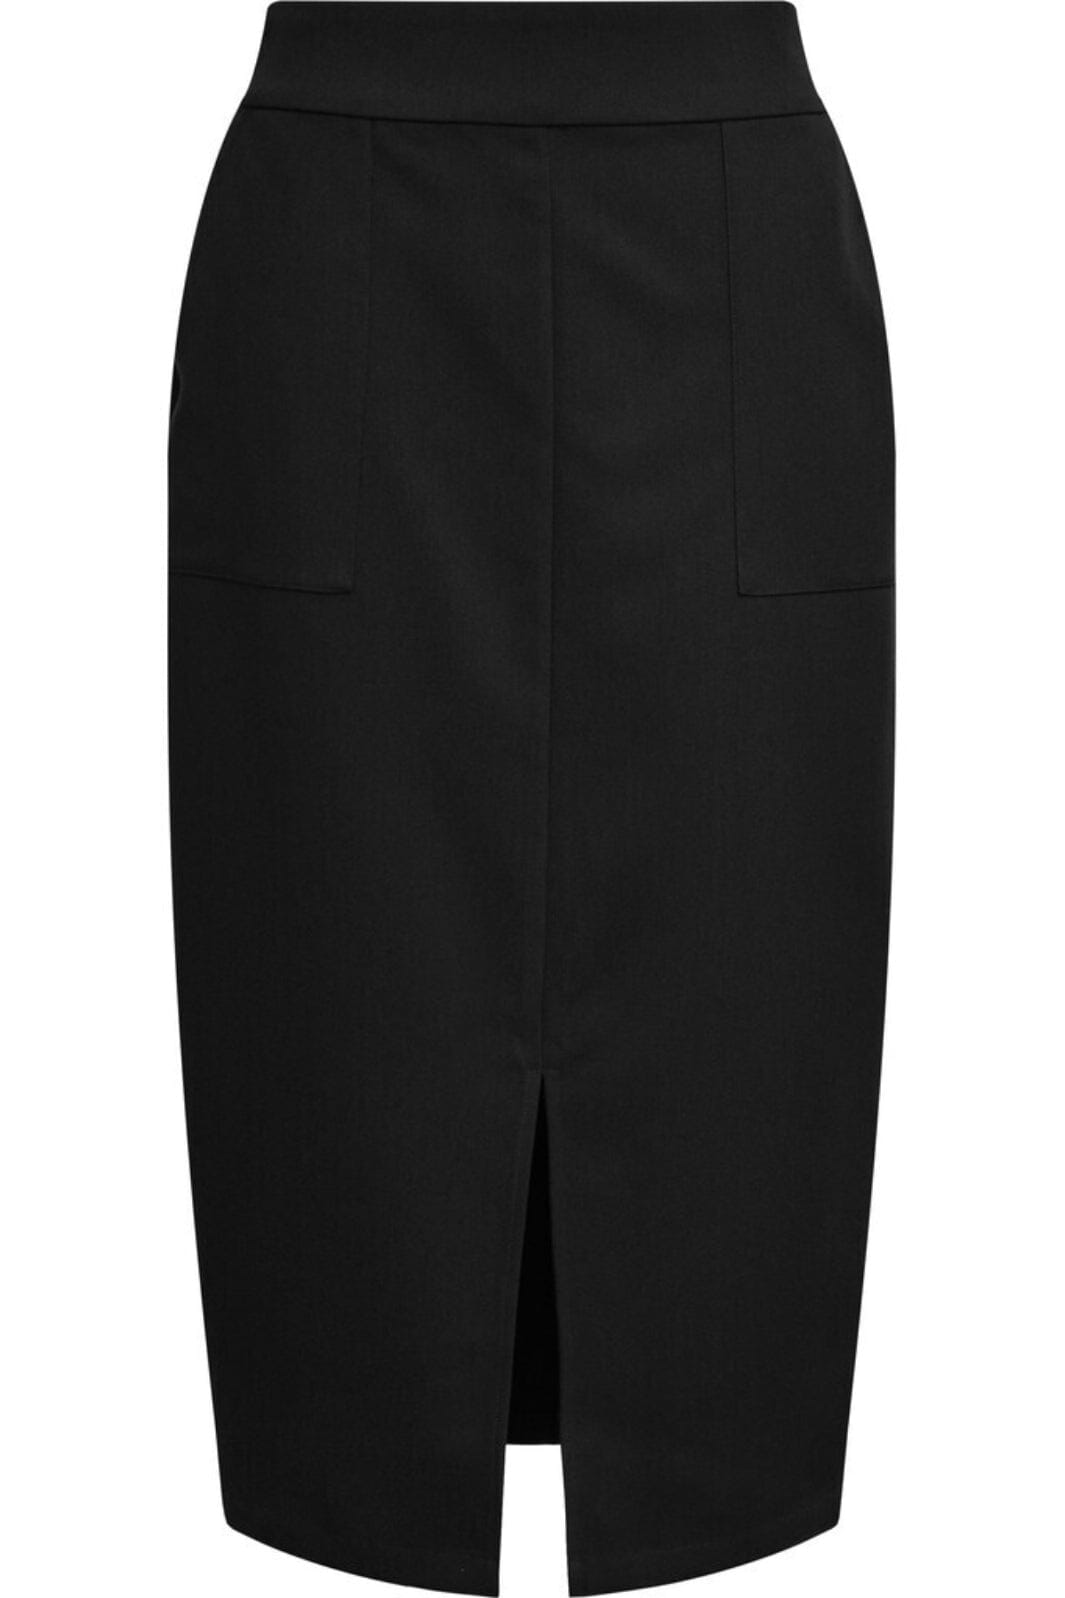 A-VIEW - Sibylle Skirt - 999 Black Nederdele 